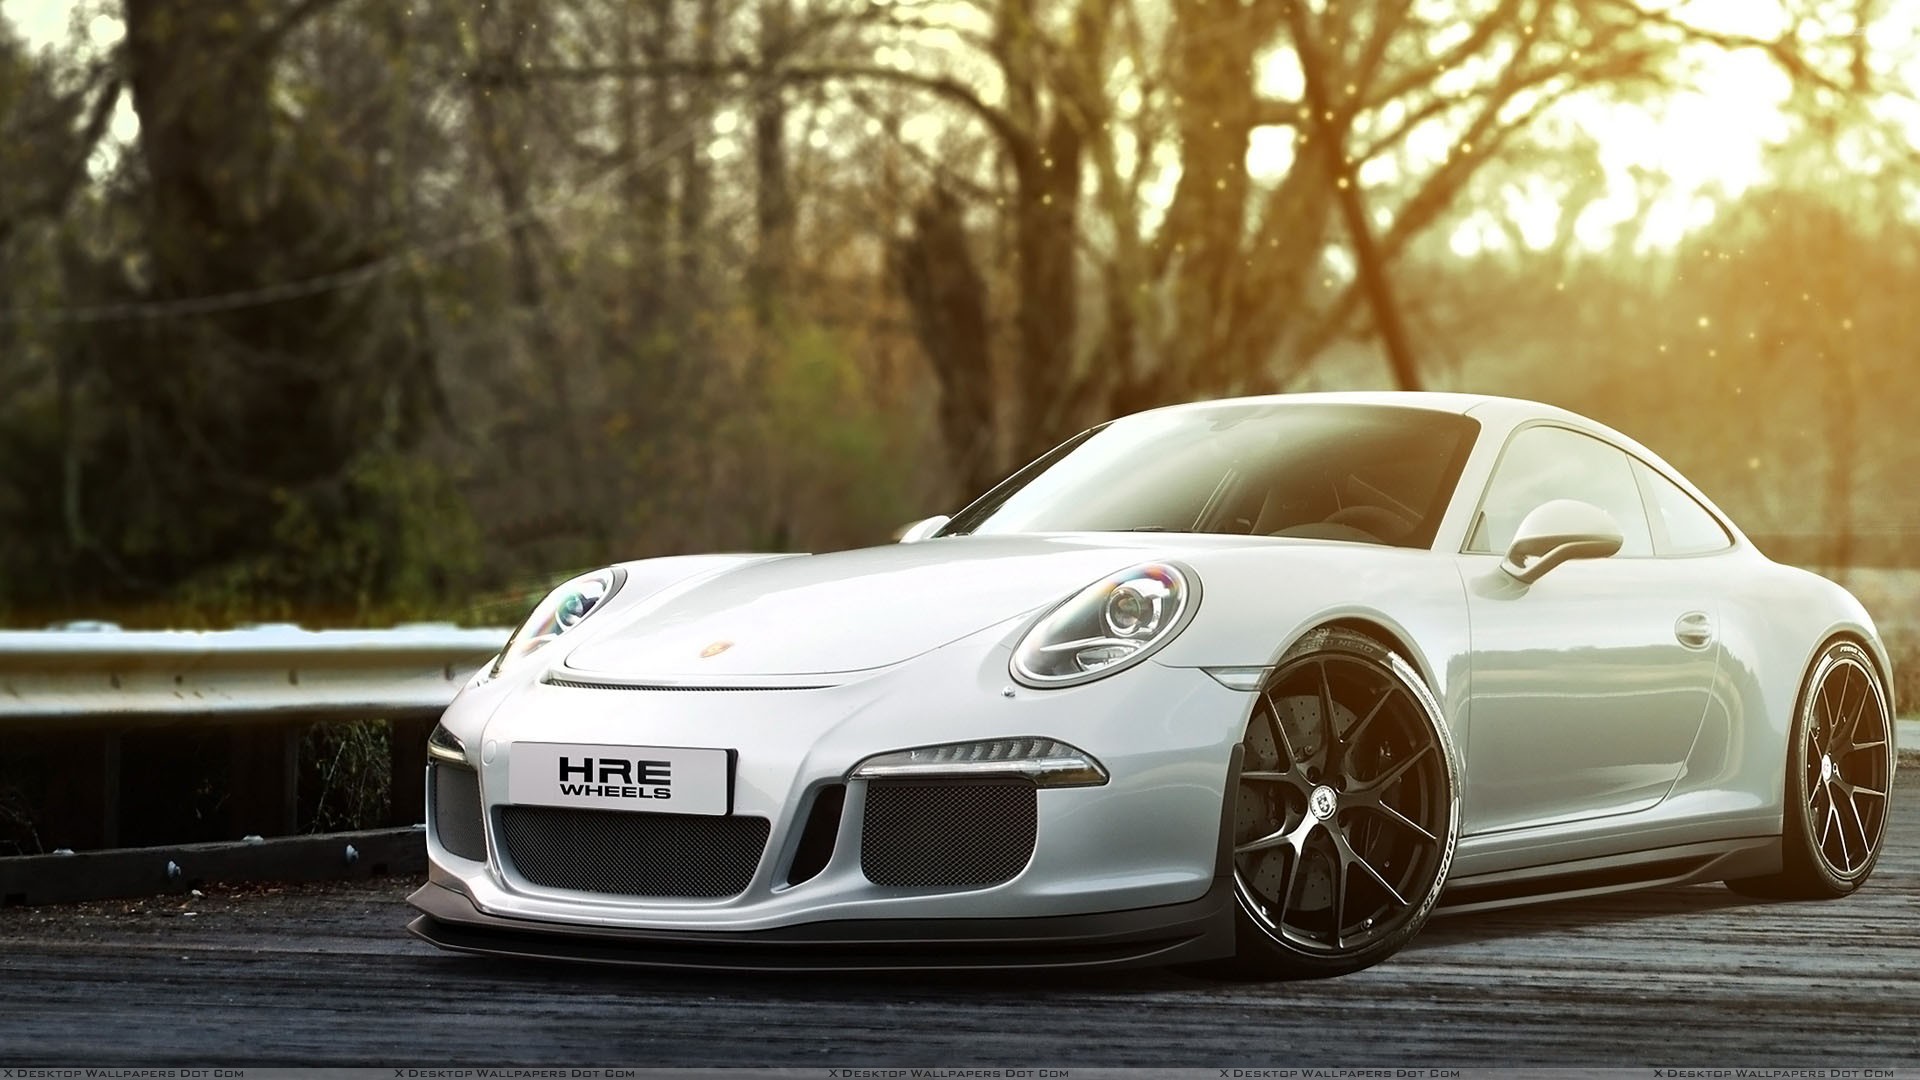 Porsche GT3 Wallpapers Photos Images in HD